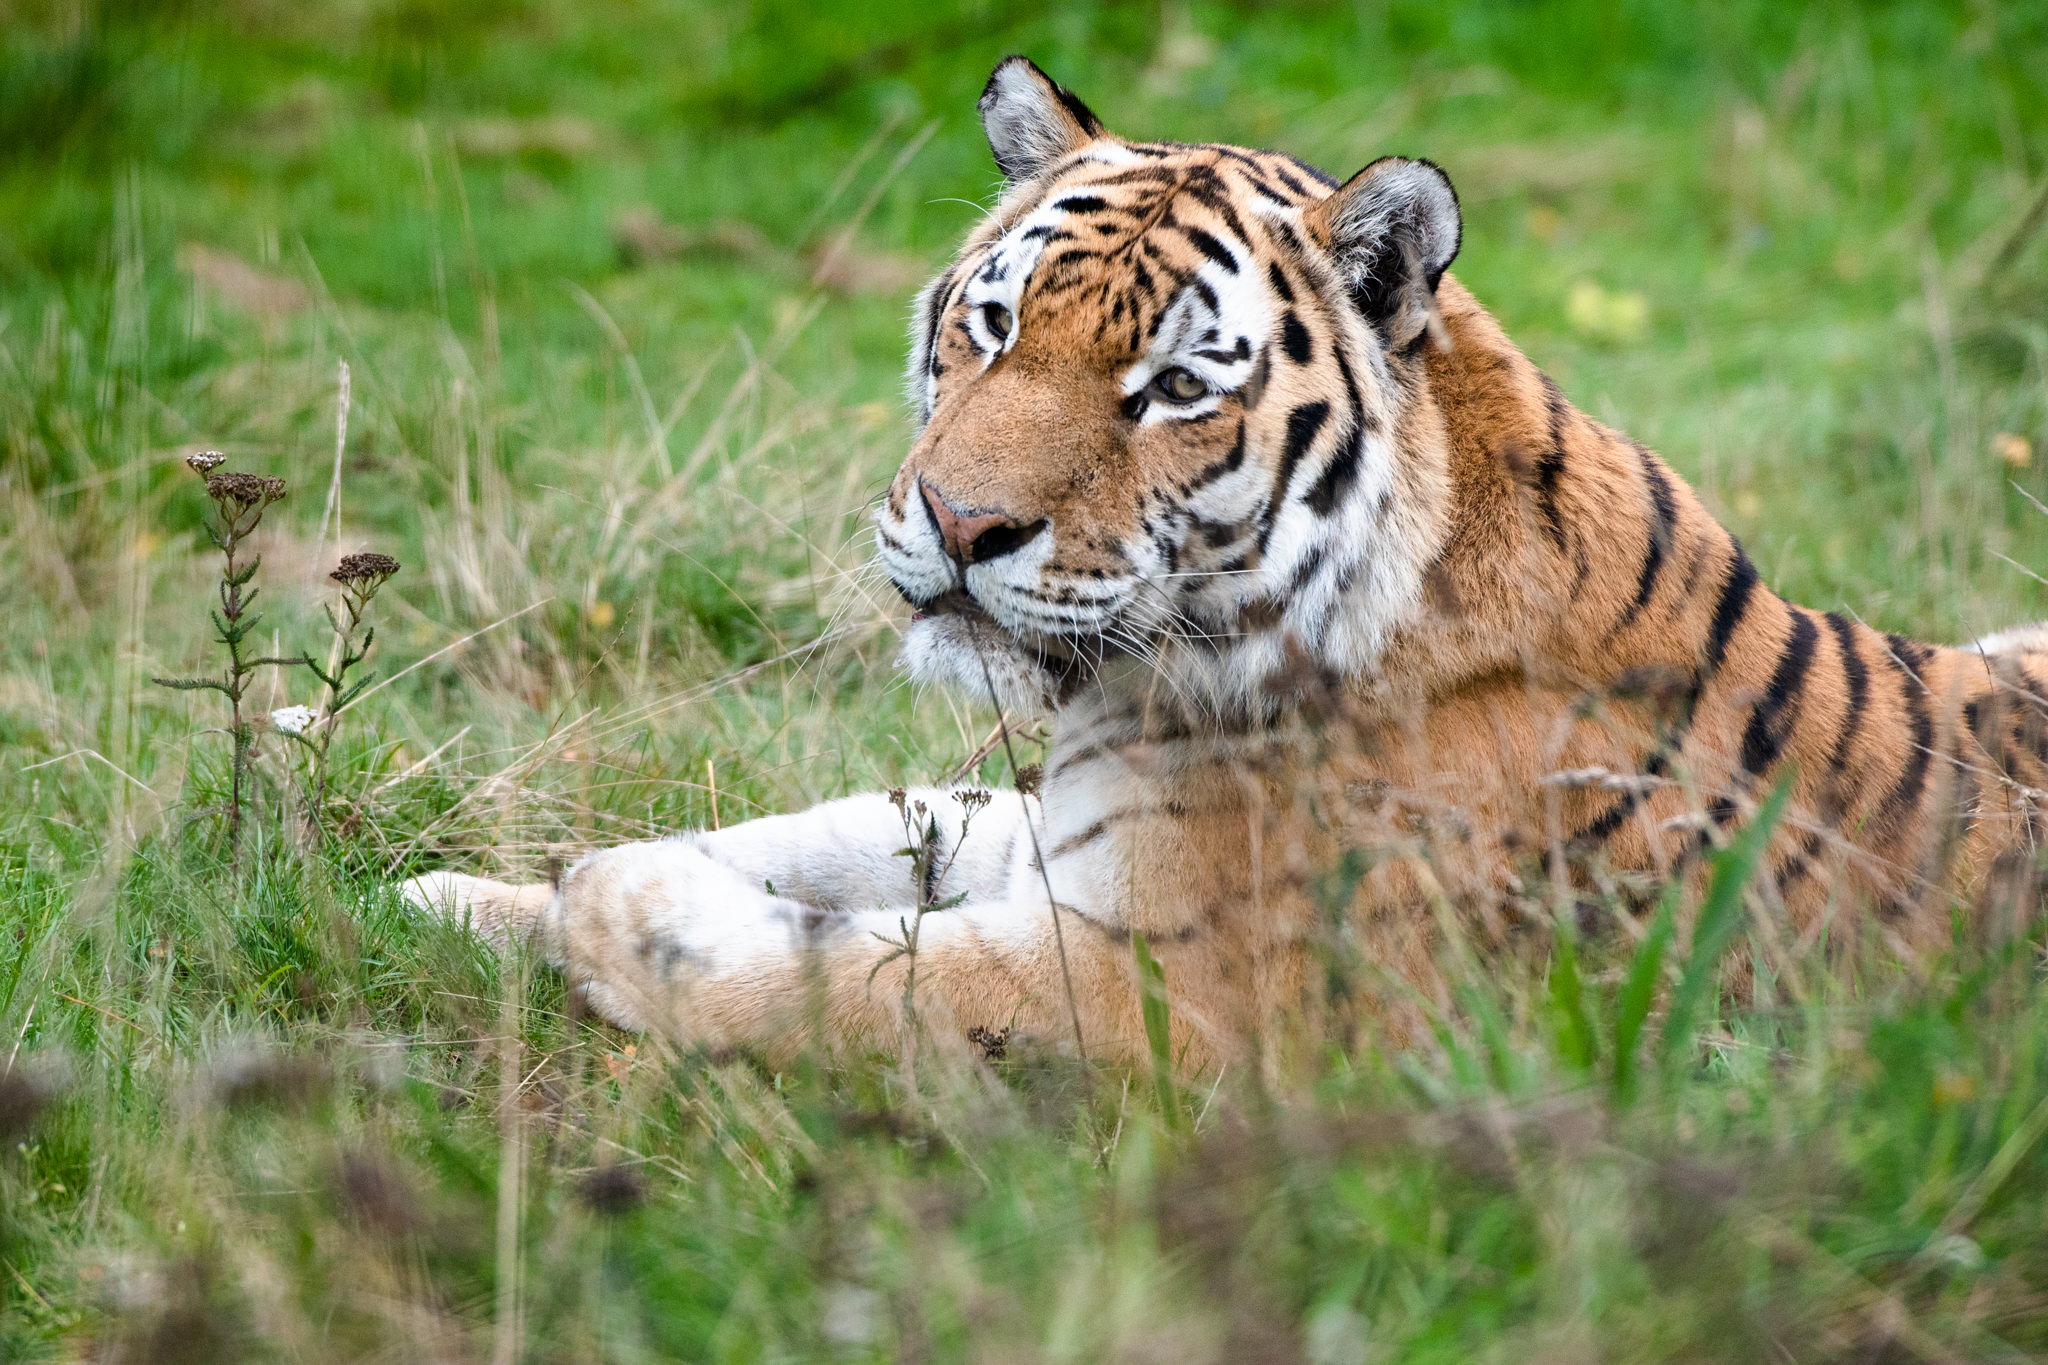 highland-wildlife-park-sitting-tiger-marty-3174-small.jpg